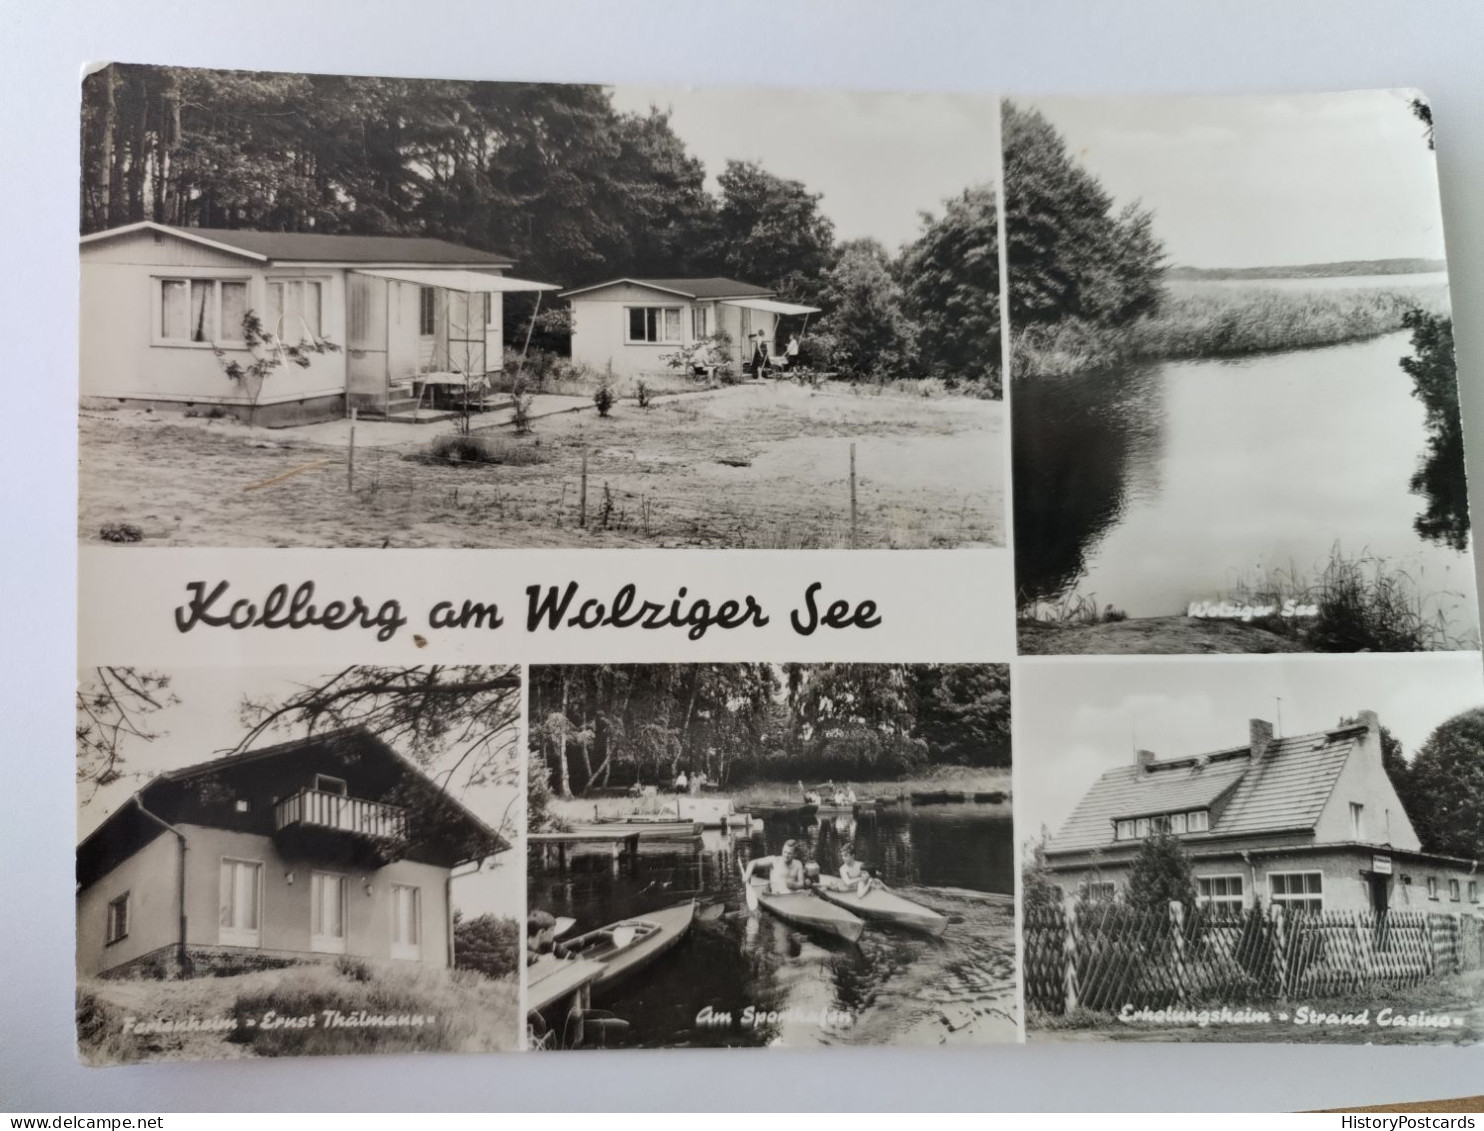 Kolberg Am Wolziger See, Ferienheime, 1974 - Teupitz